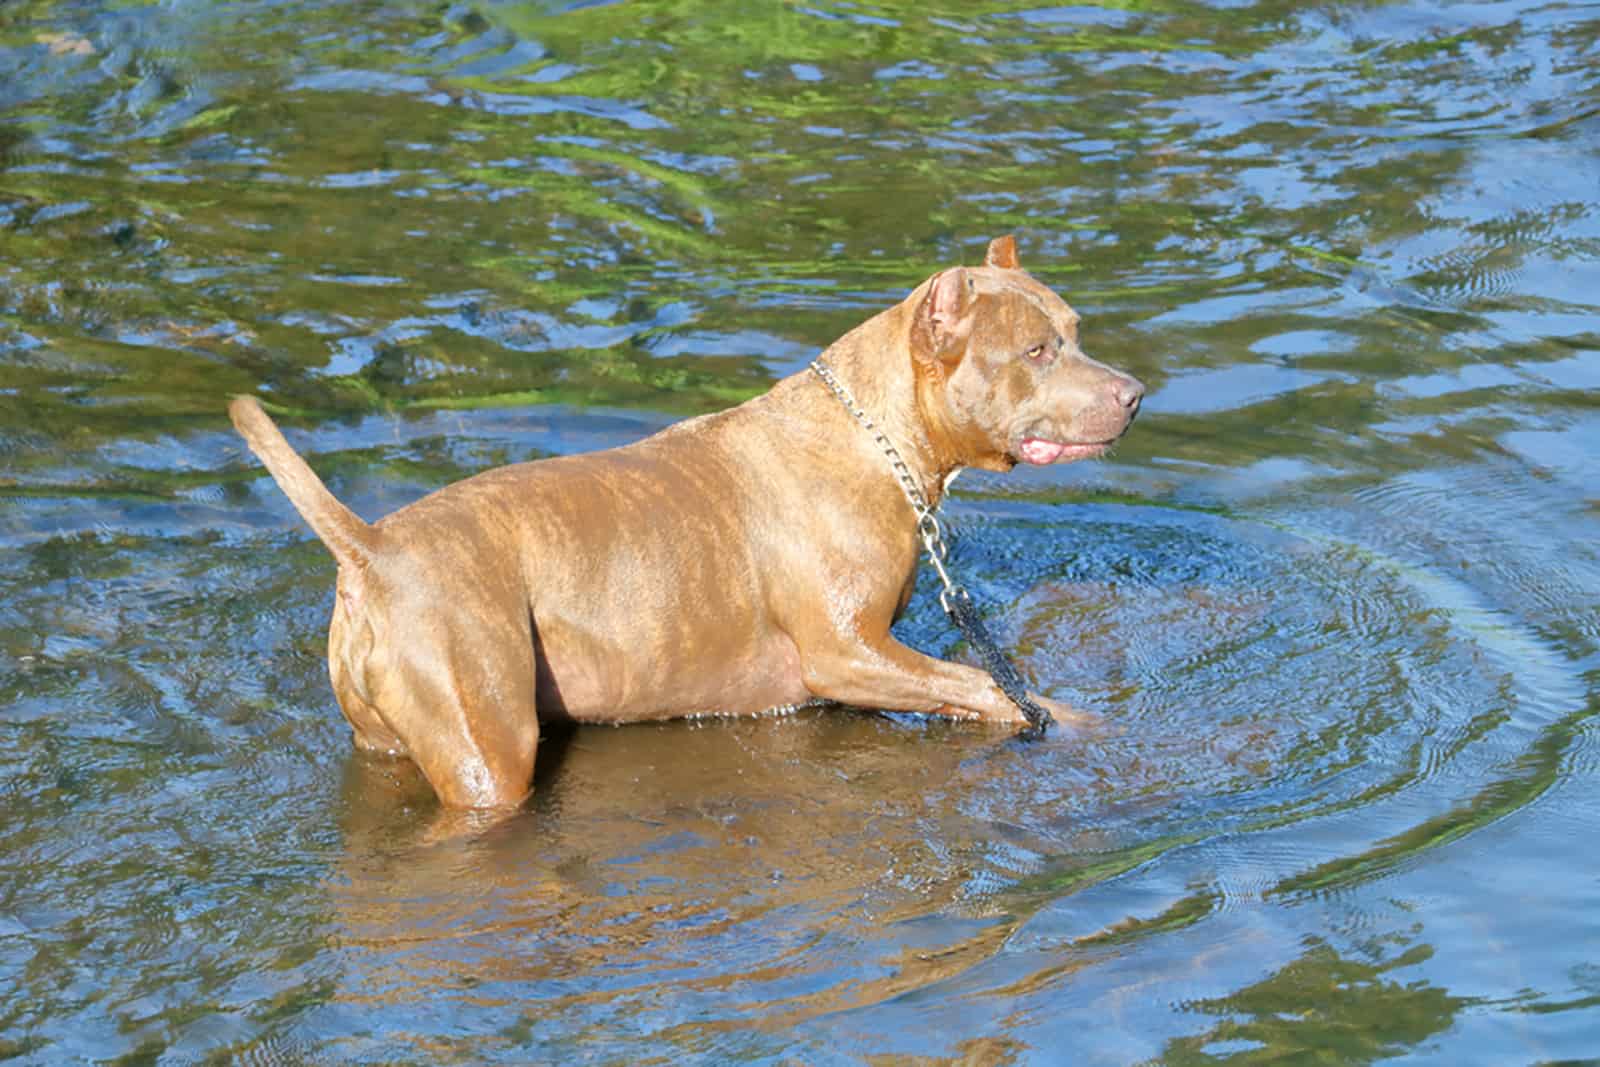 catahoula bulldog standing in a water